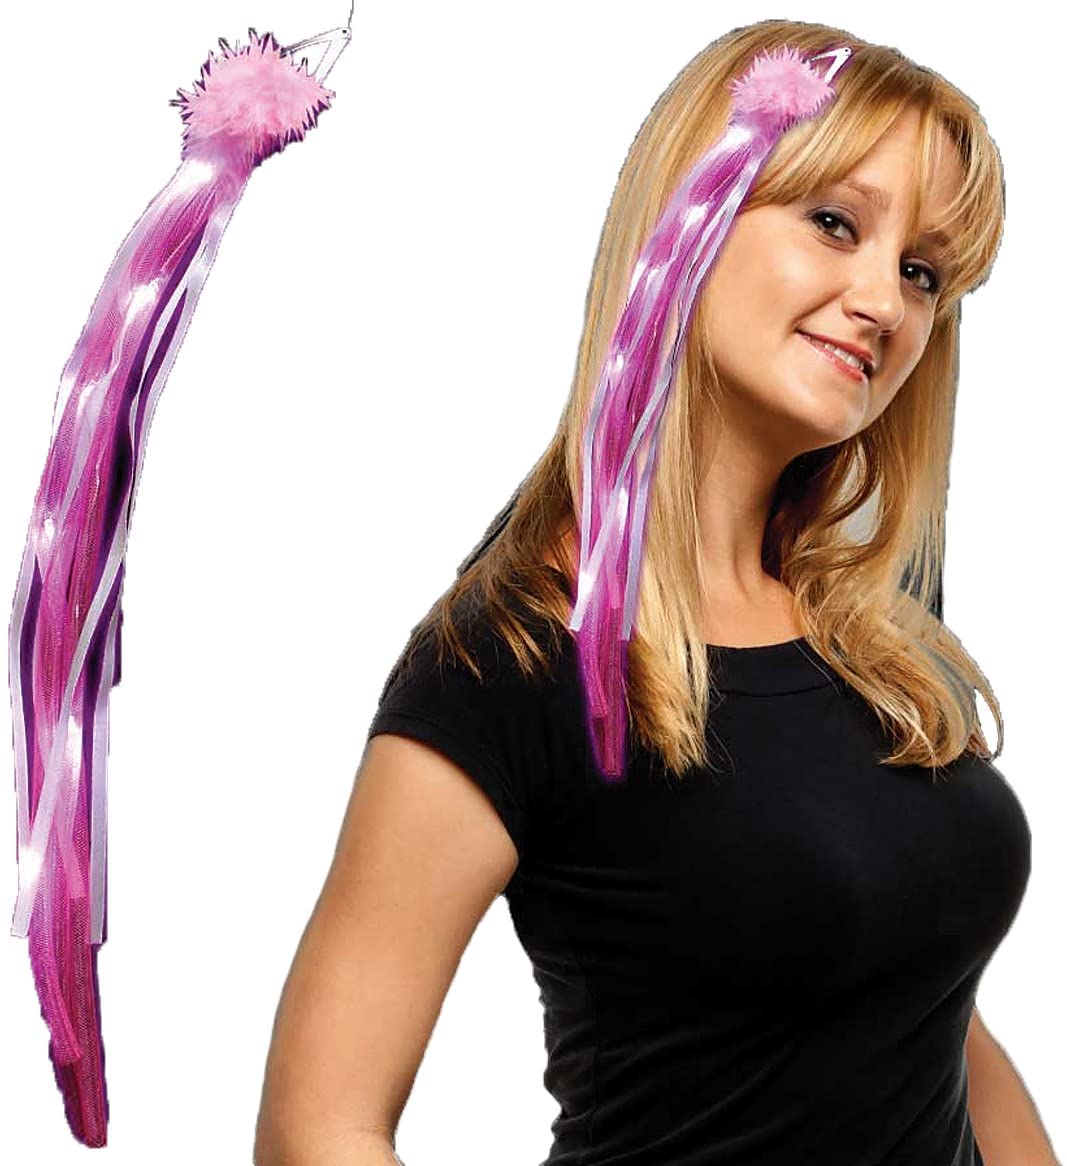 Supreme Diva Princess Light Up Ribbons Hair Clips Pink White 18"